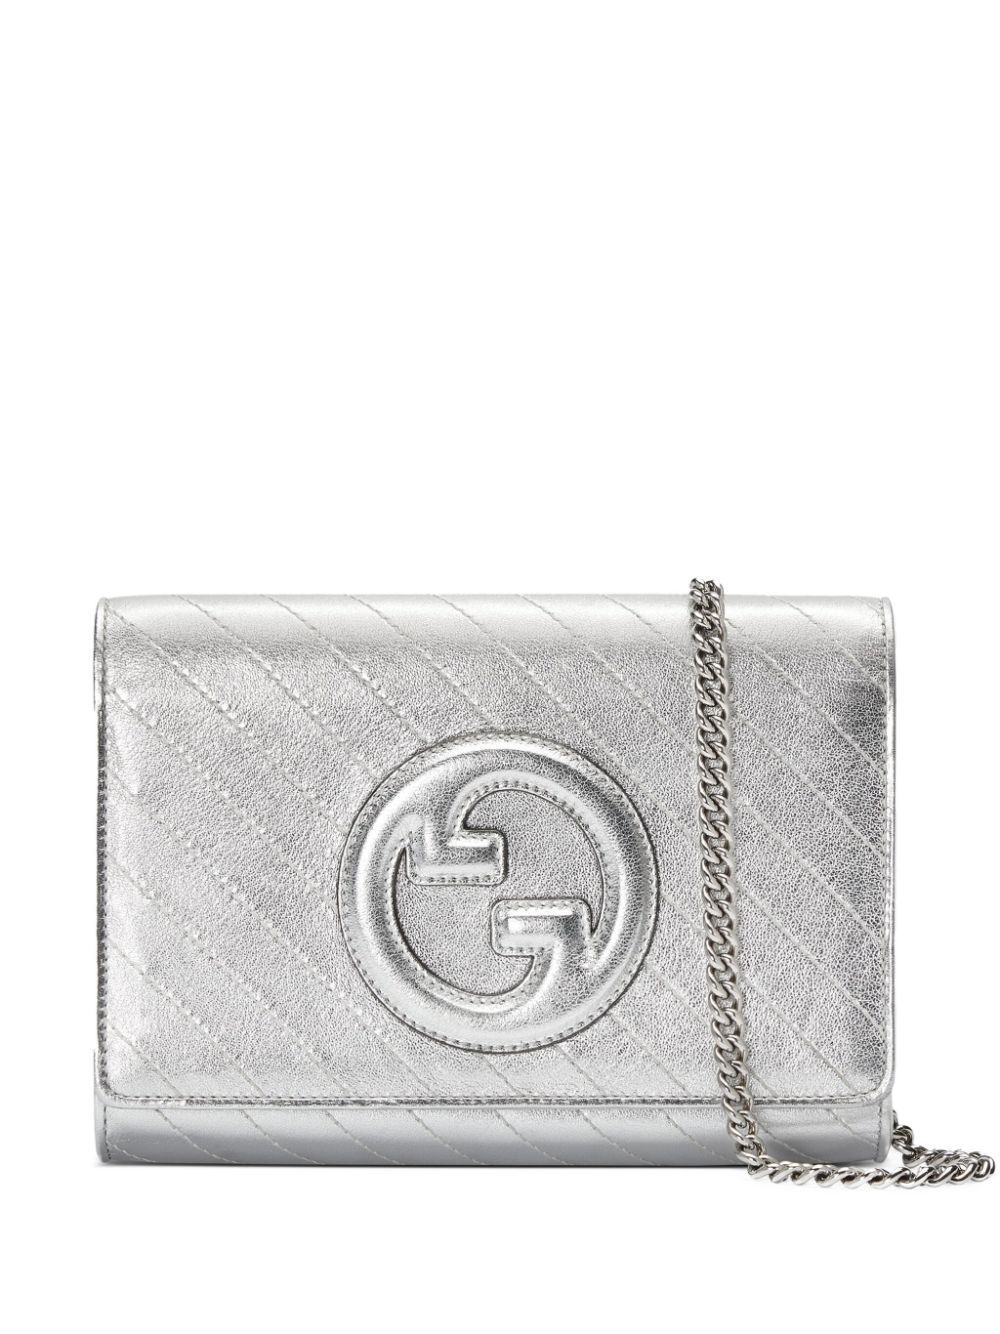 Gucci Blondie Metallic Crossbody Bag In Silver